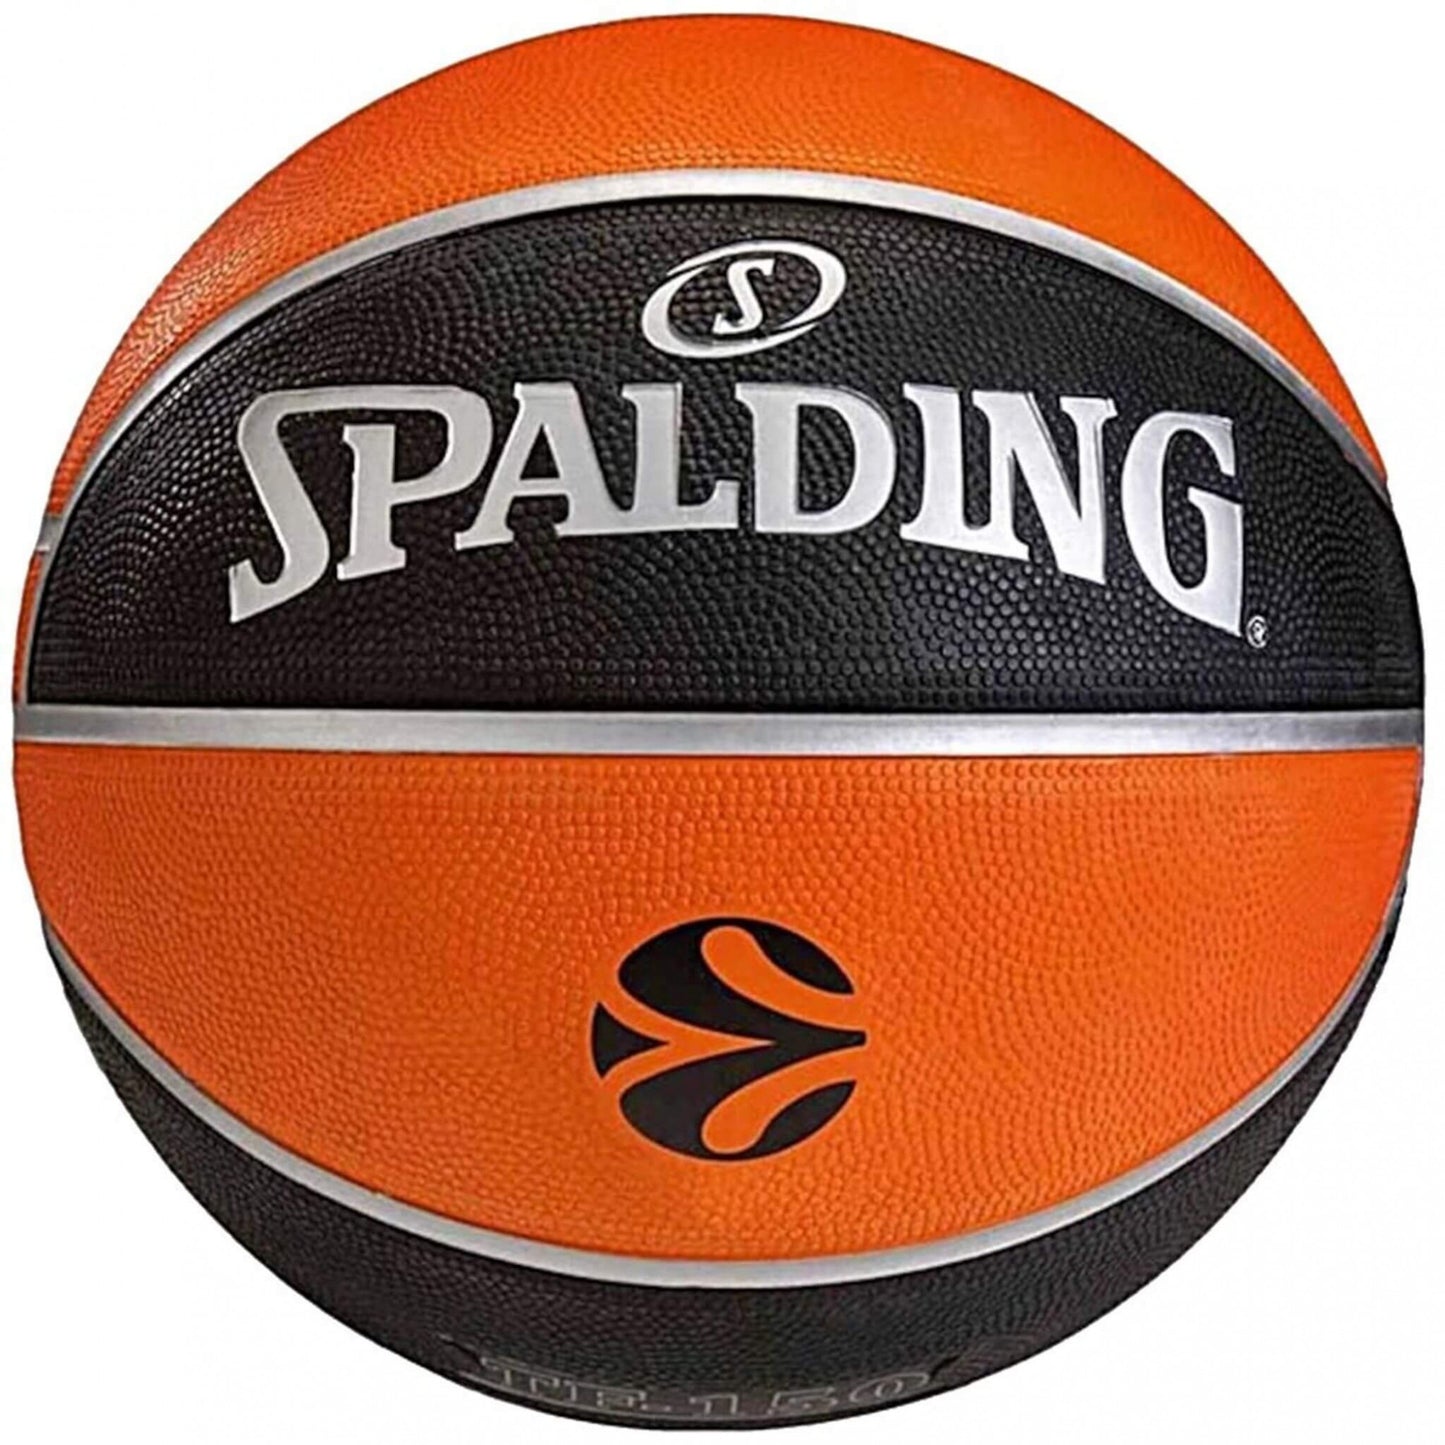 Spalding Varsity TF-150 Rubber Basketball Euroleague (sz. 5)